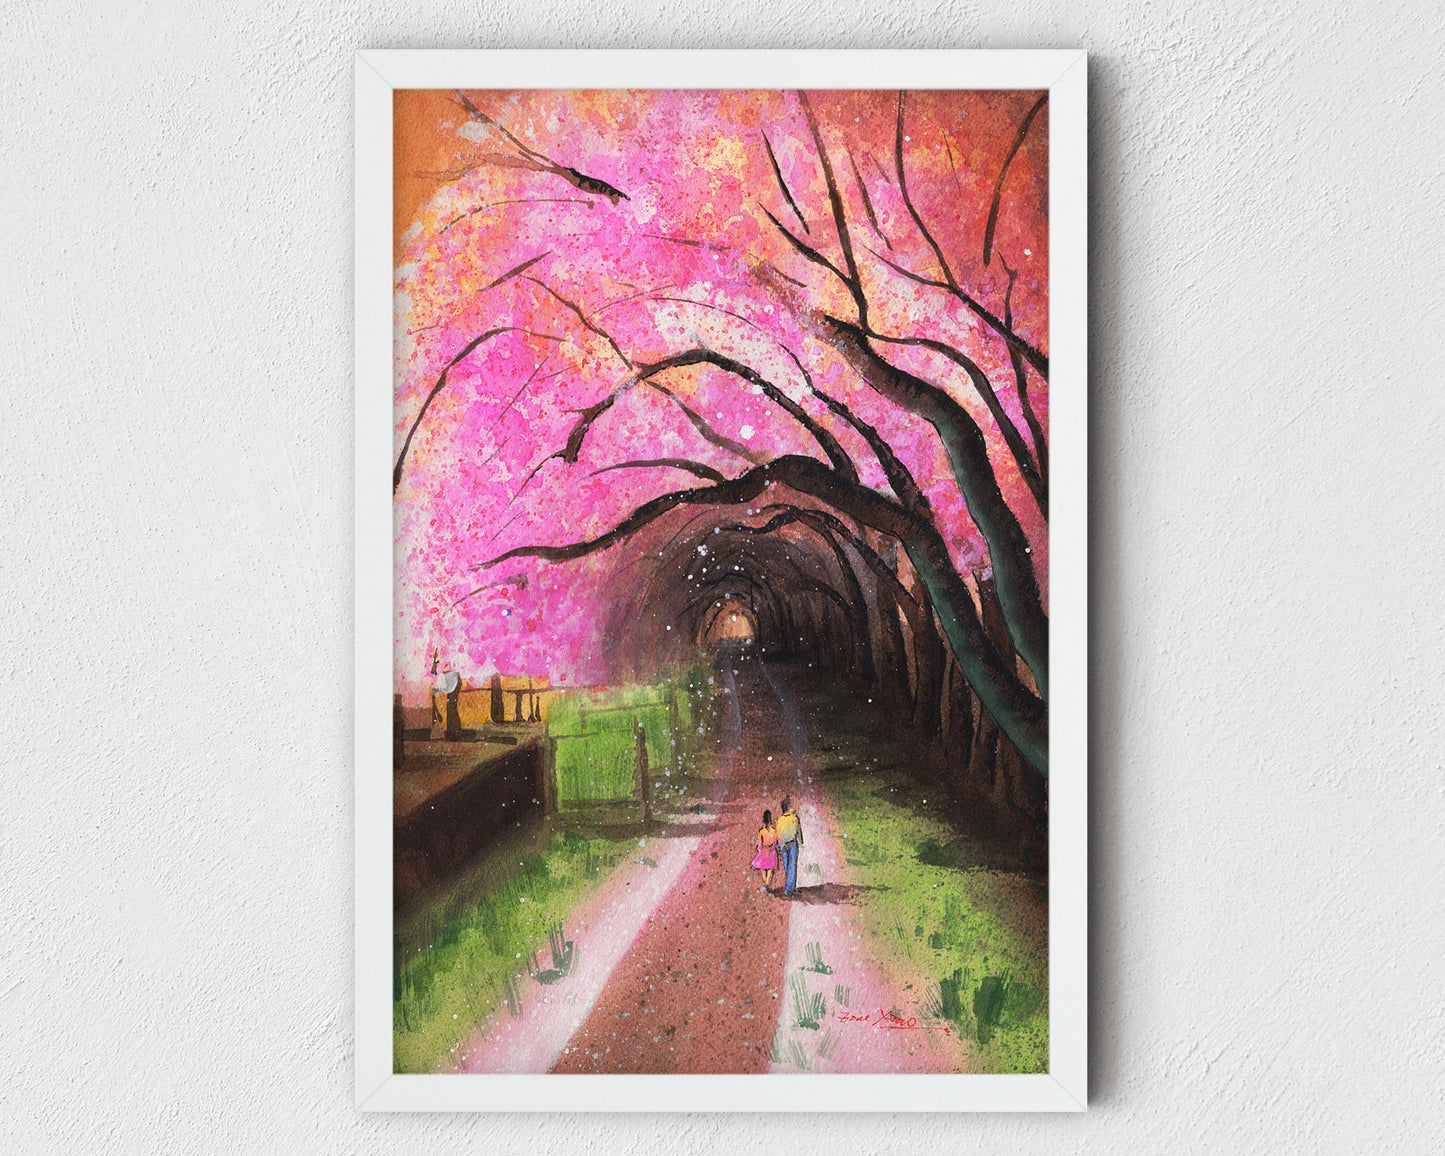 Japanese cherry blossom art print